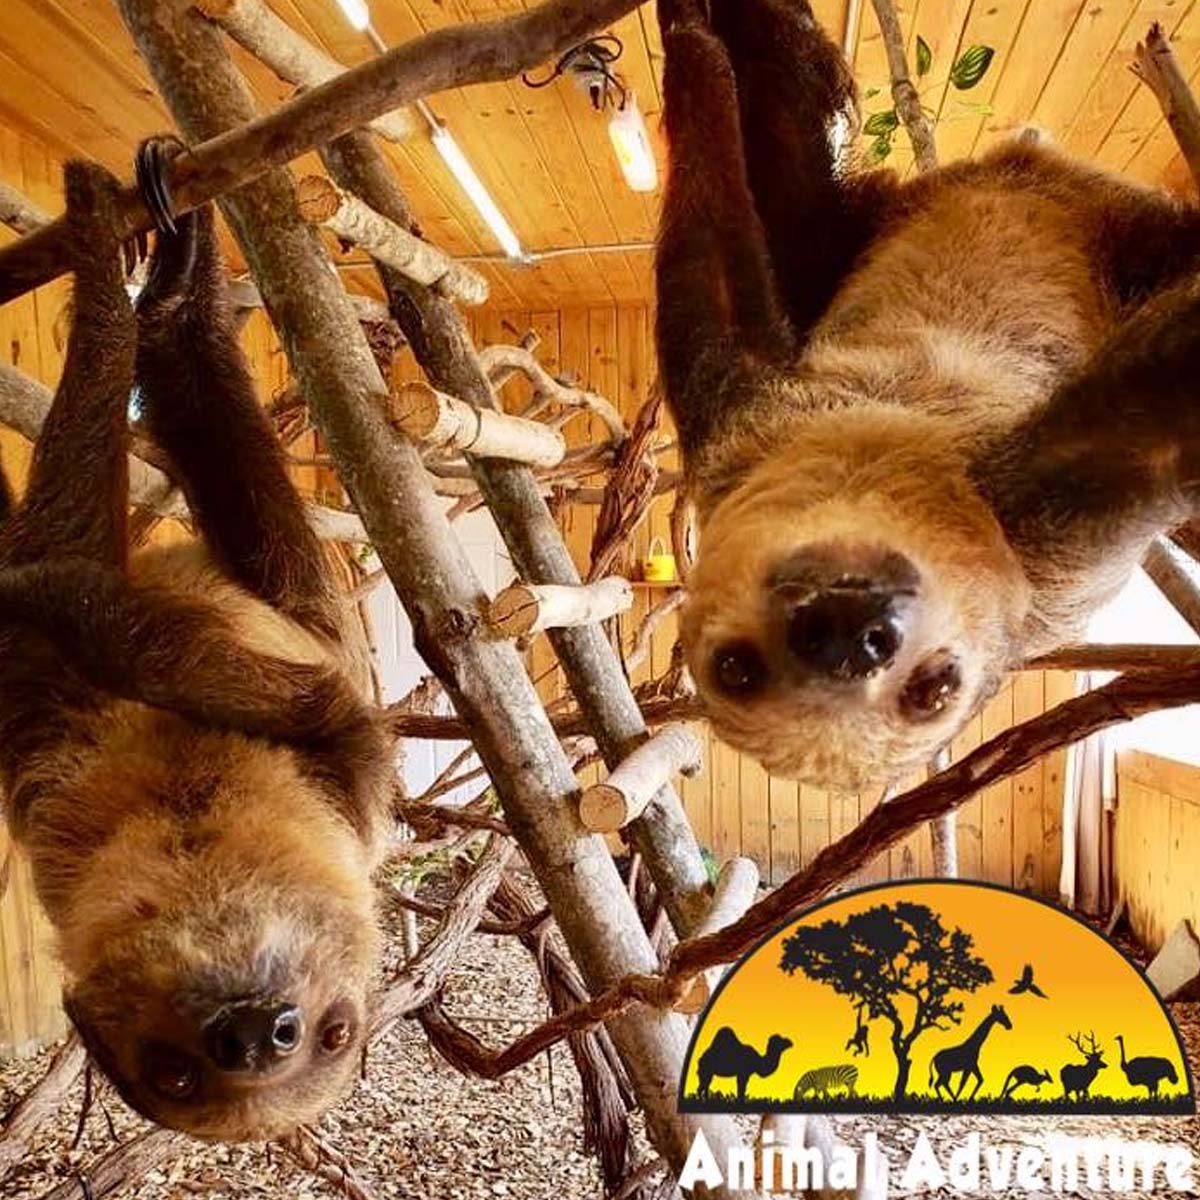 Animal Adventure Park | Sloth Encounter